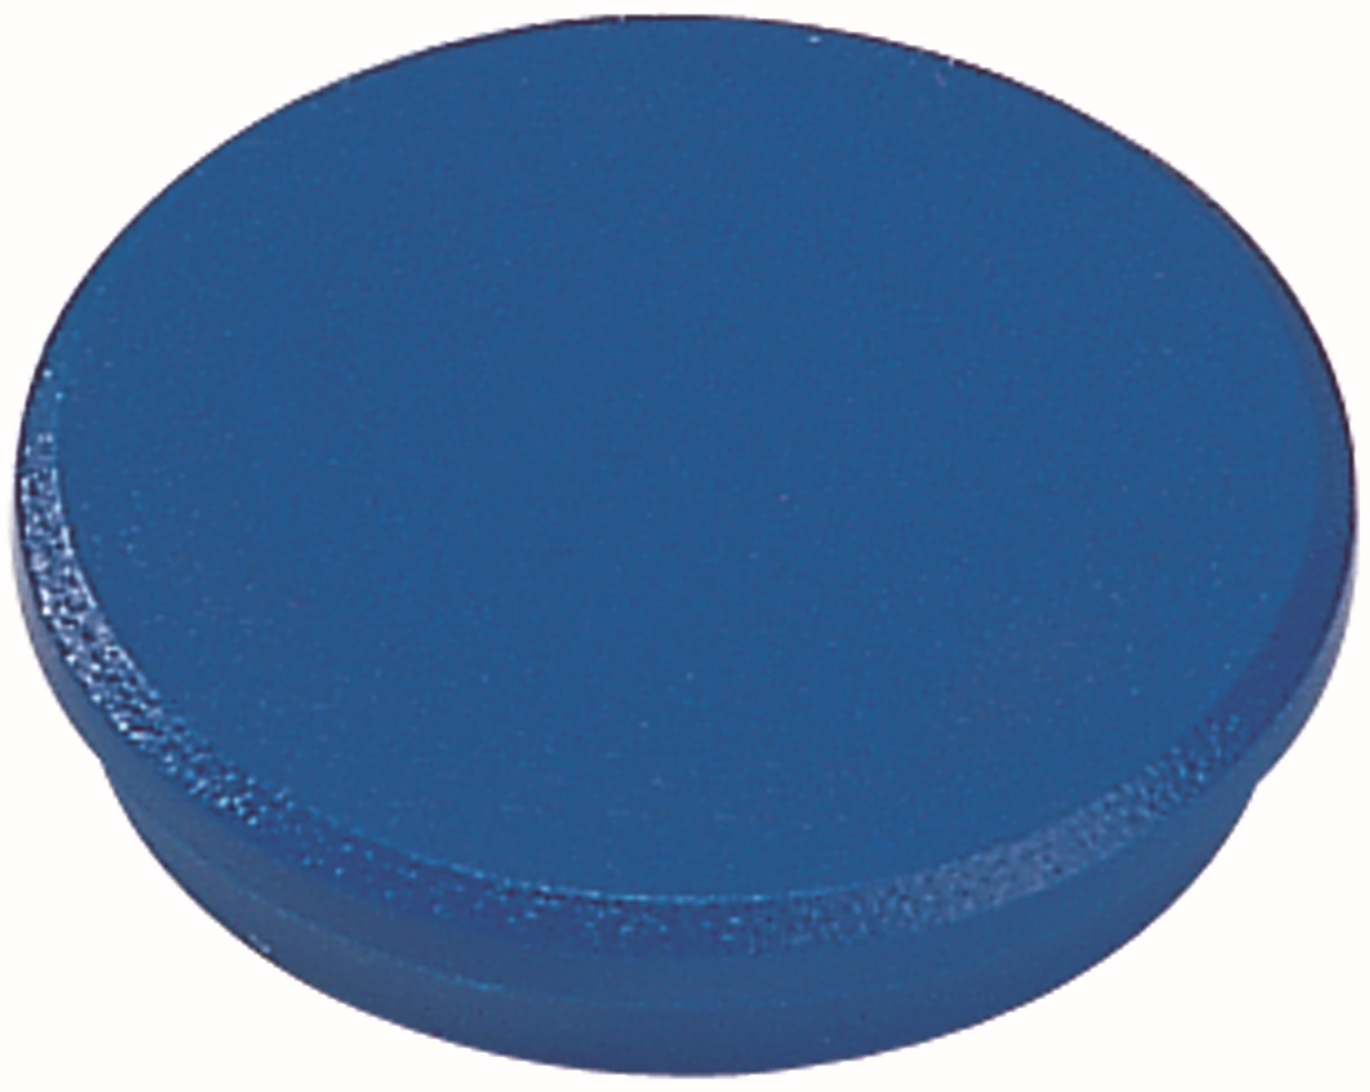 DAHLE Magnete 95532-21398 10 Stk. 32mm blau